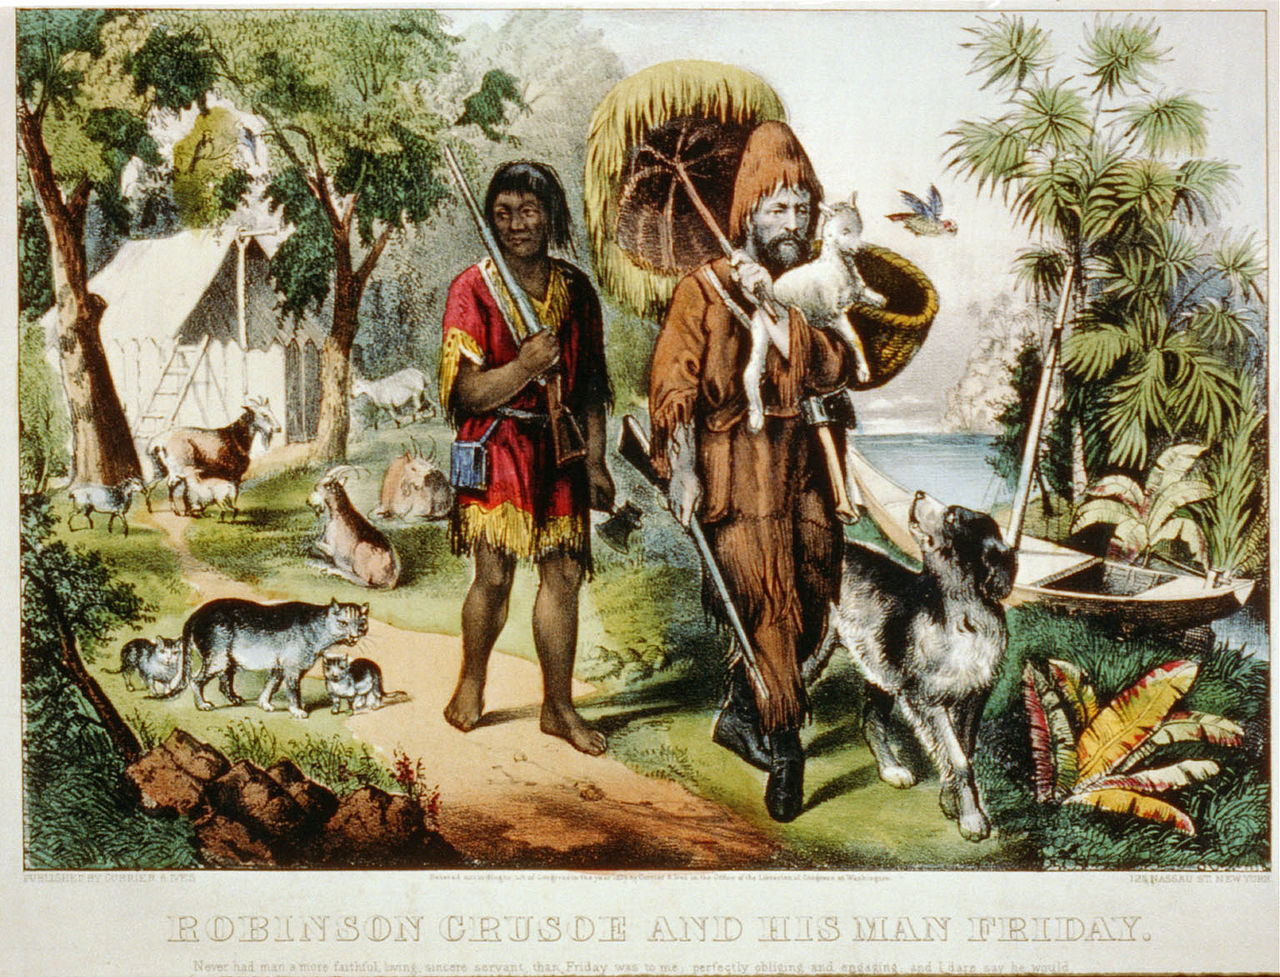 Robinson Crusoe and his man Friday